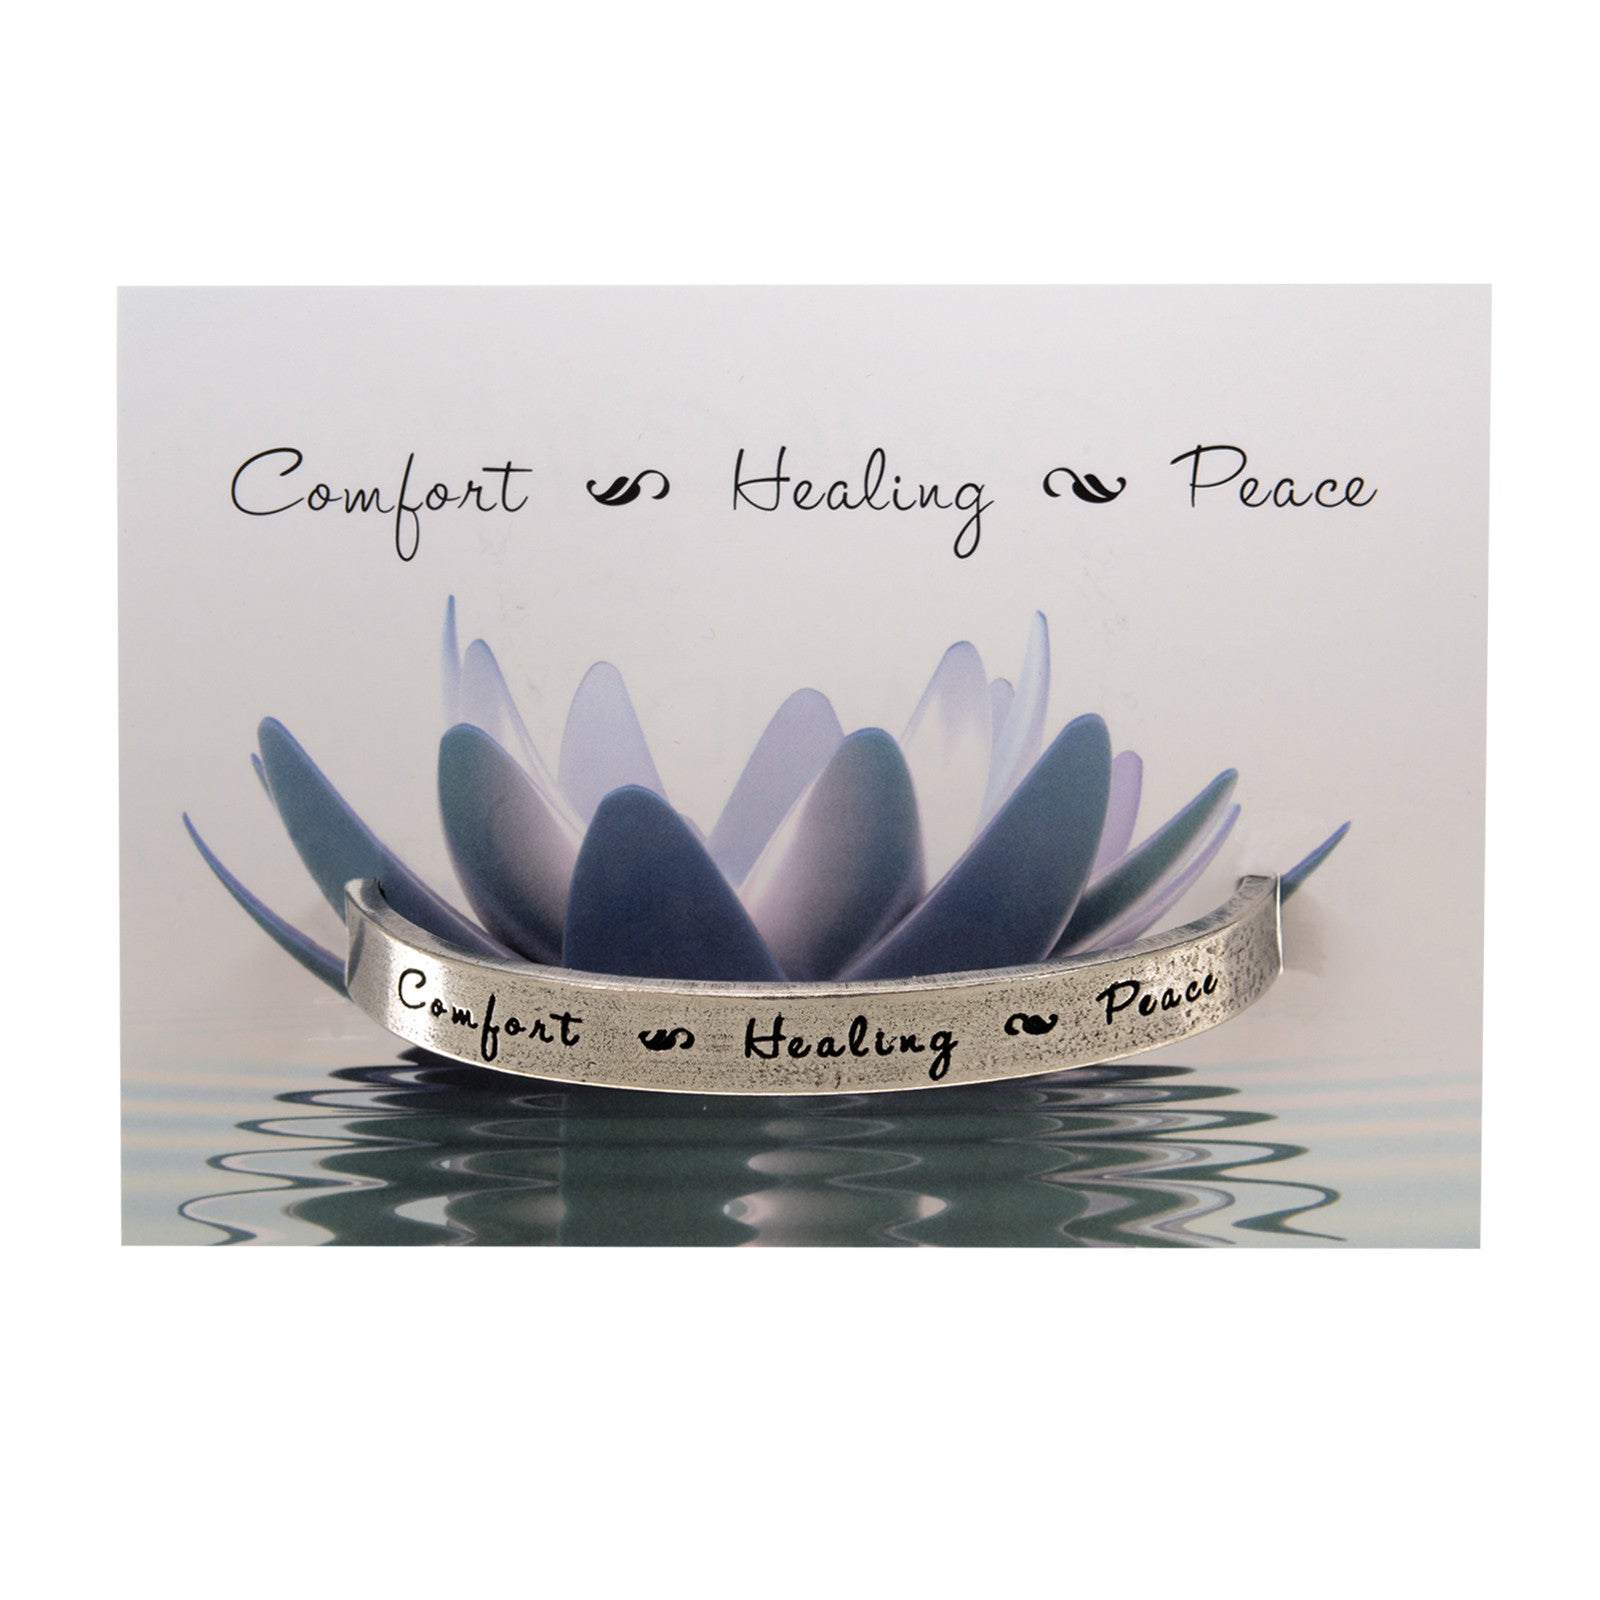 Comfort-Healing-Peace Quotable Cuff Bracelet on backer card